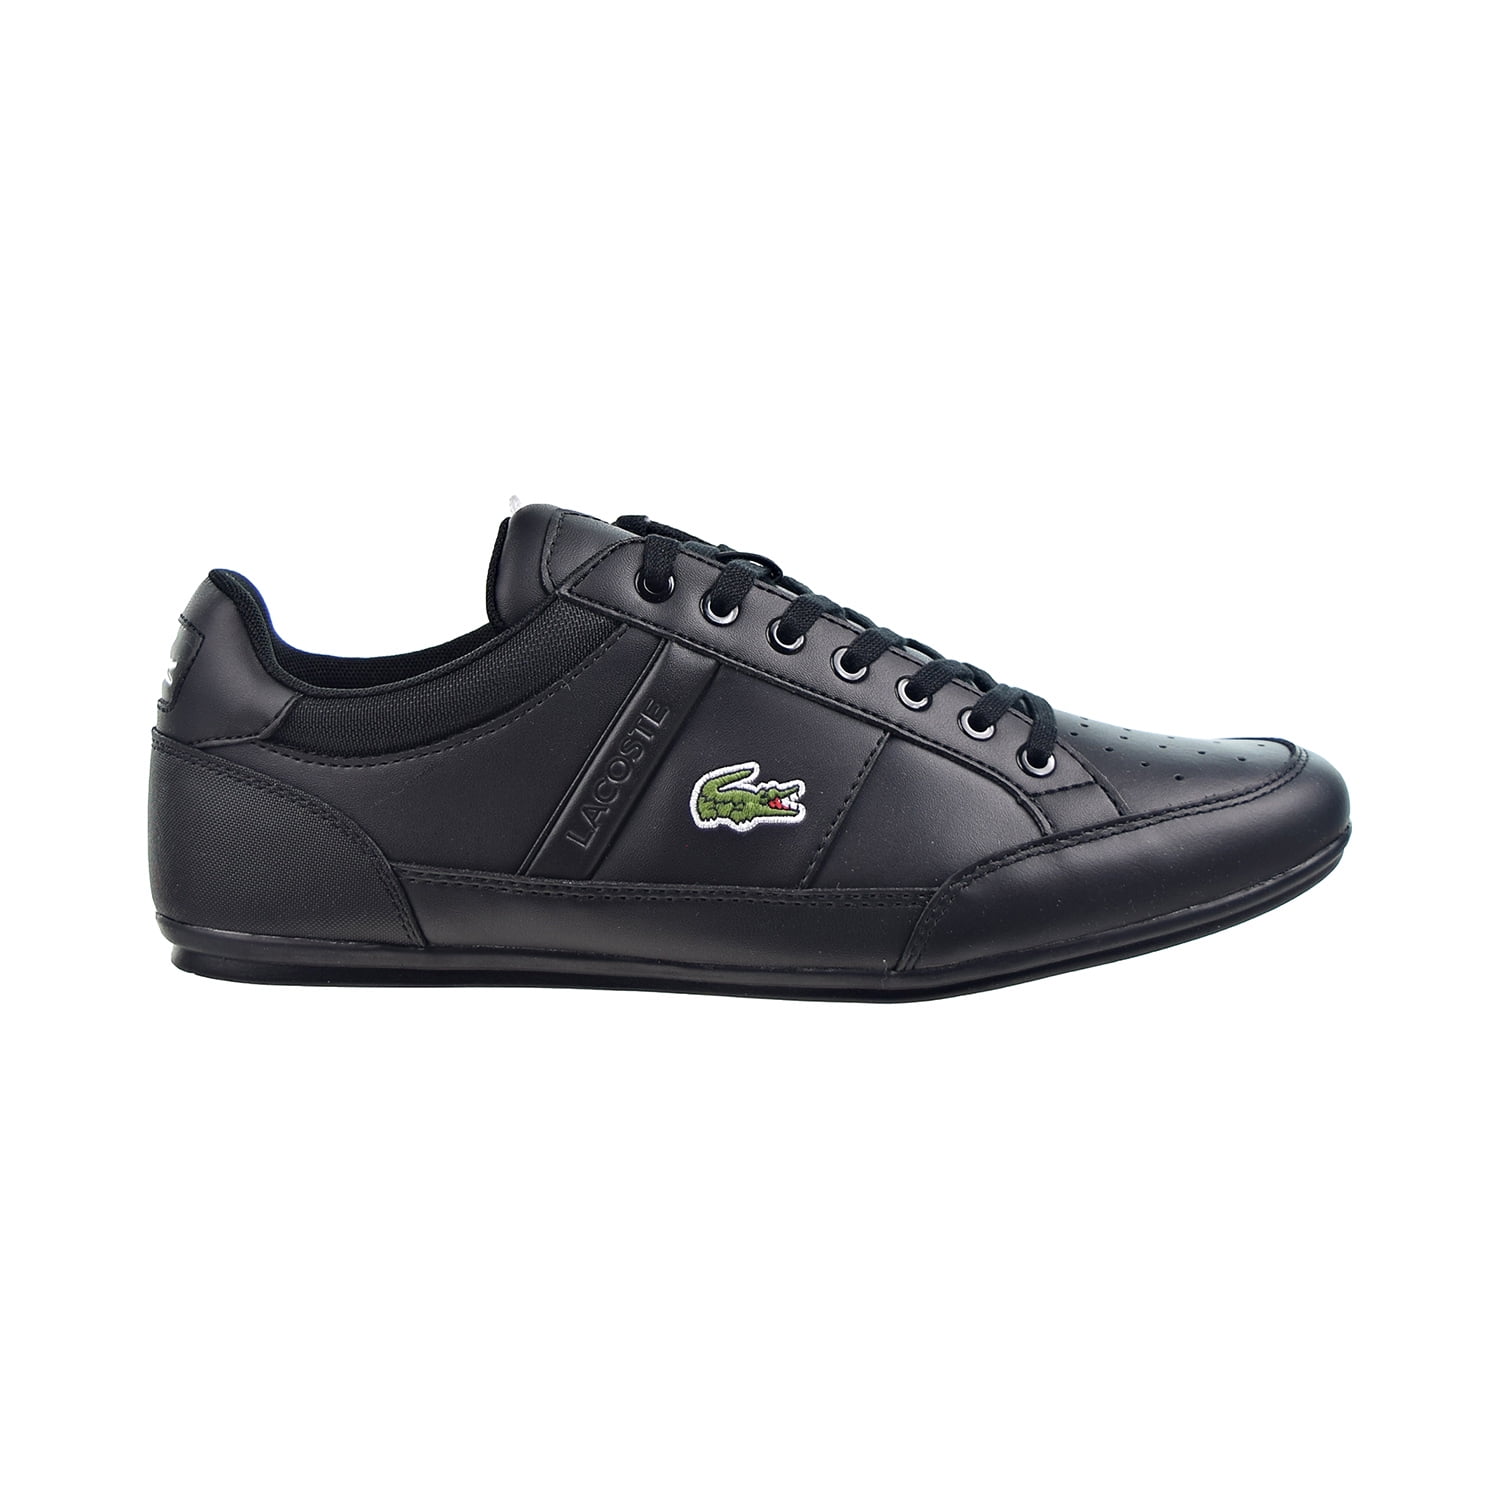 Lacoste Chaymon 0121 1 CMA Synthetic Men's Shoes Black-White 7 ...